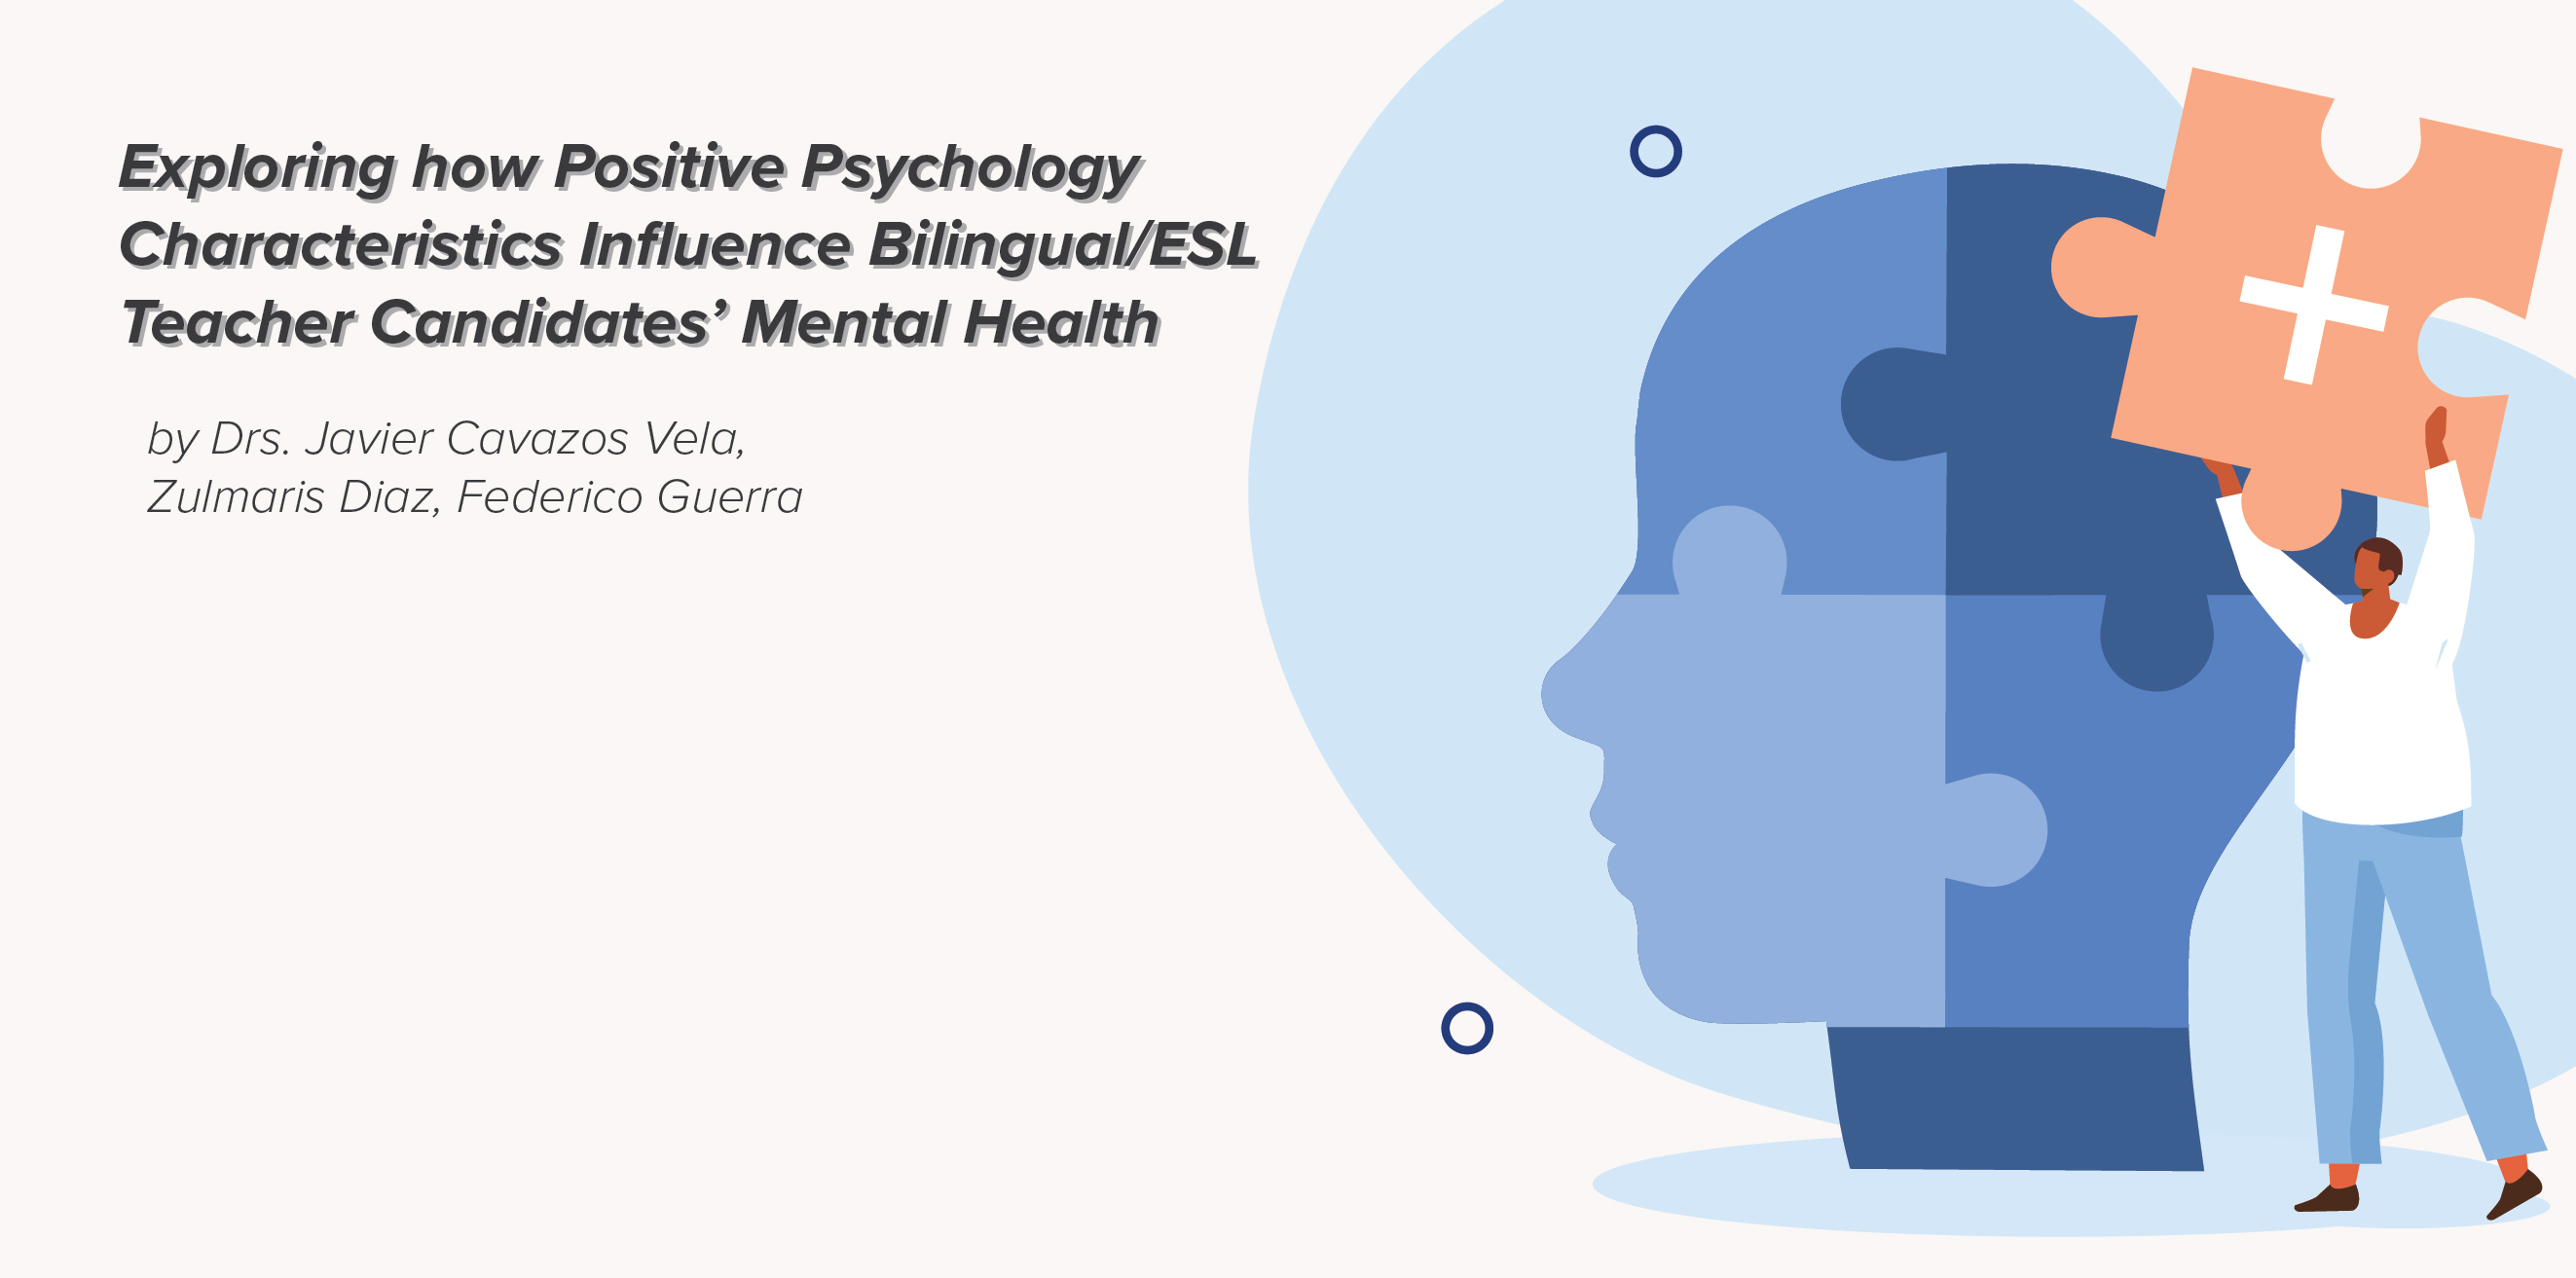 Exploring how Positive Psychology Characteristics Influence Bilingual/ESL Teacher Candidates' Mental Health